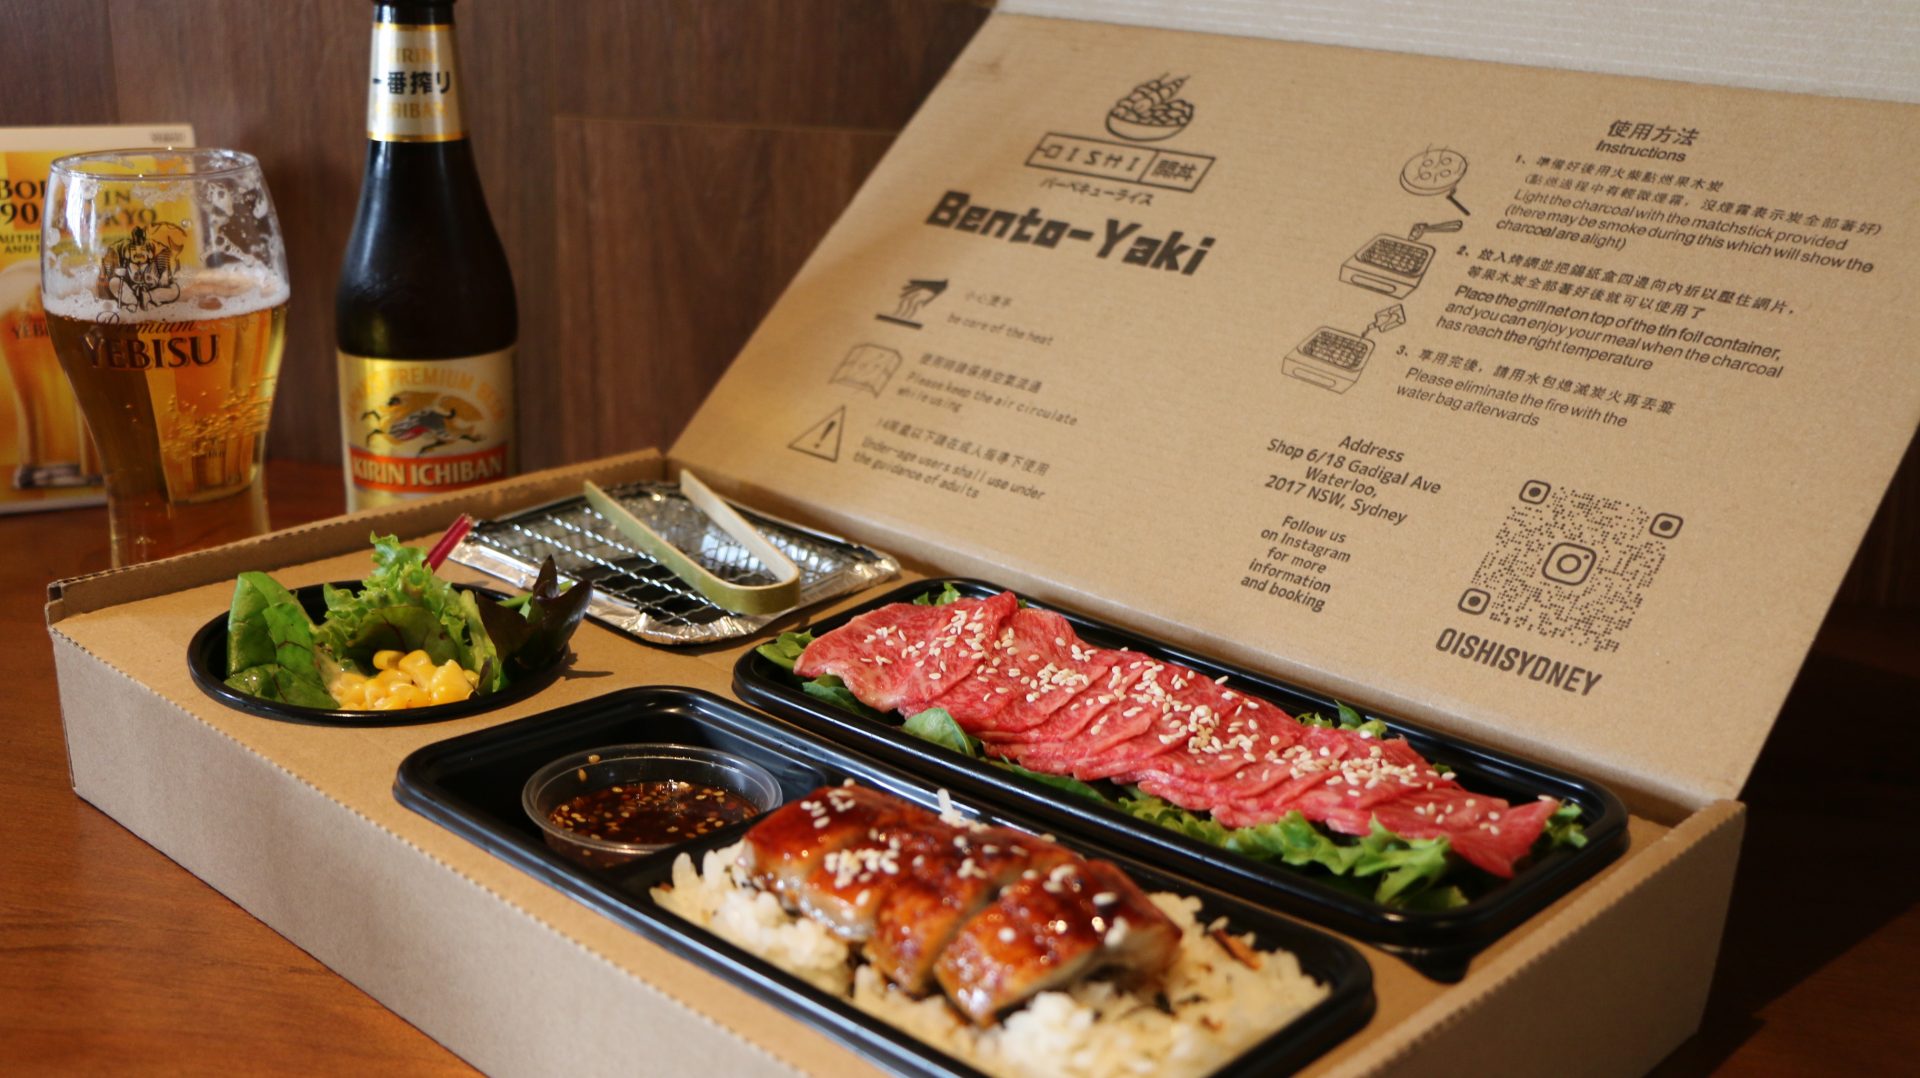 Bento-Yaki Box